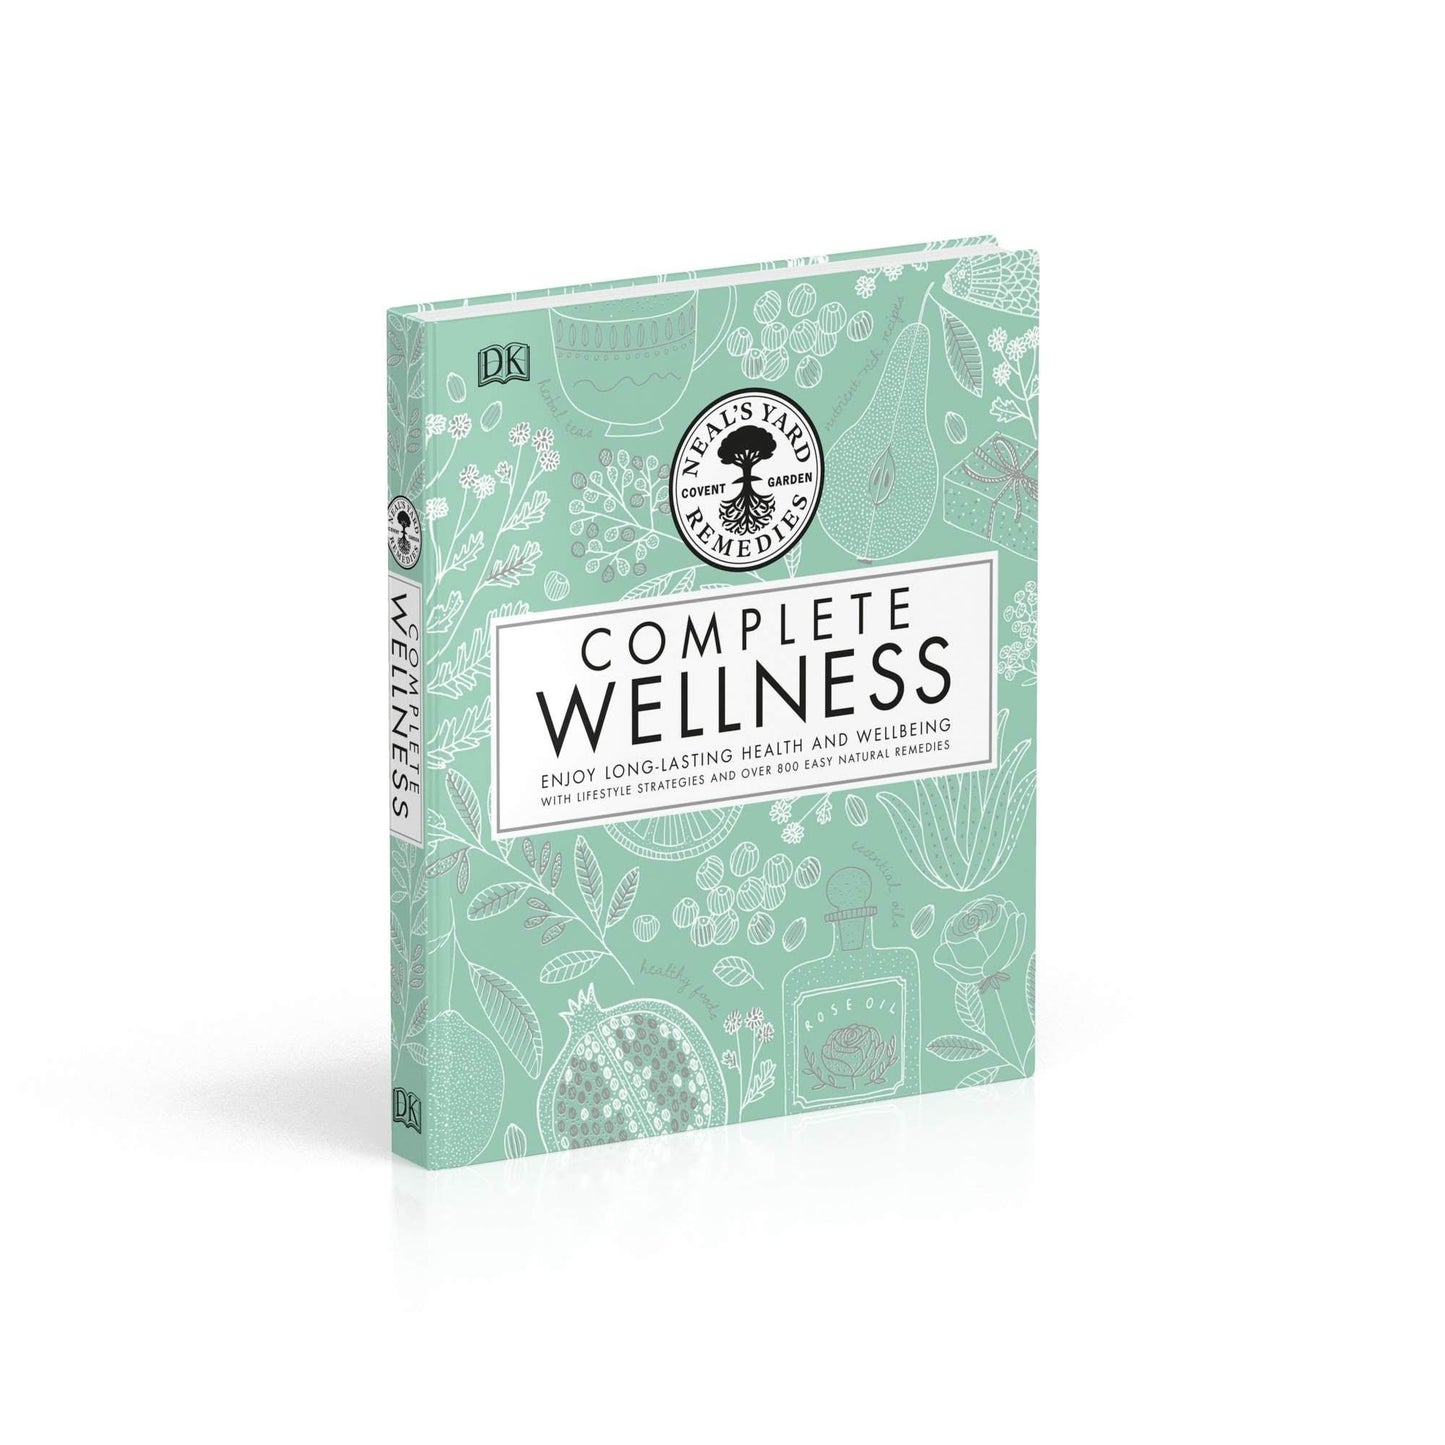 Complete Wellness: Neal's Yard Remedies